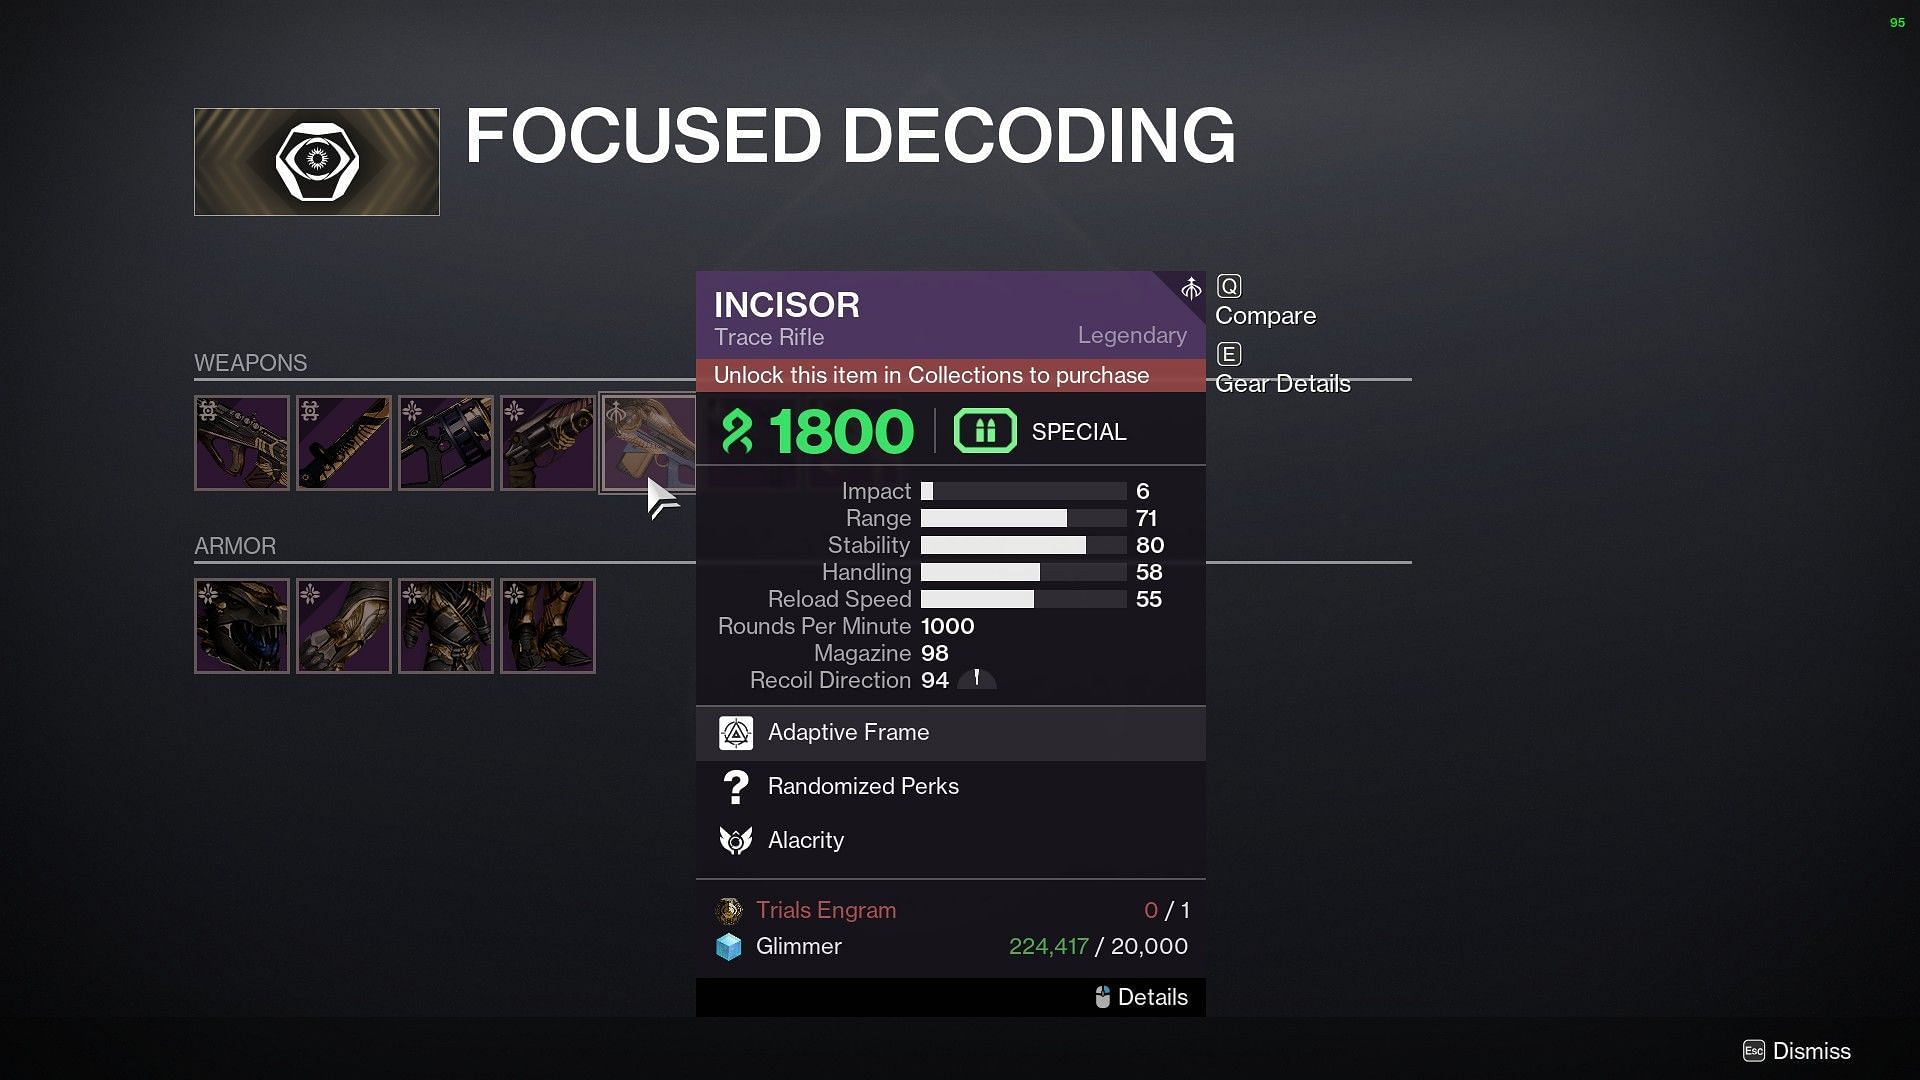 Incisor in Focused Decoding in Destiny 2